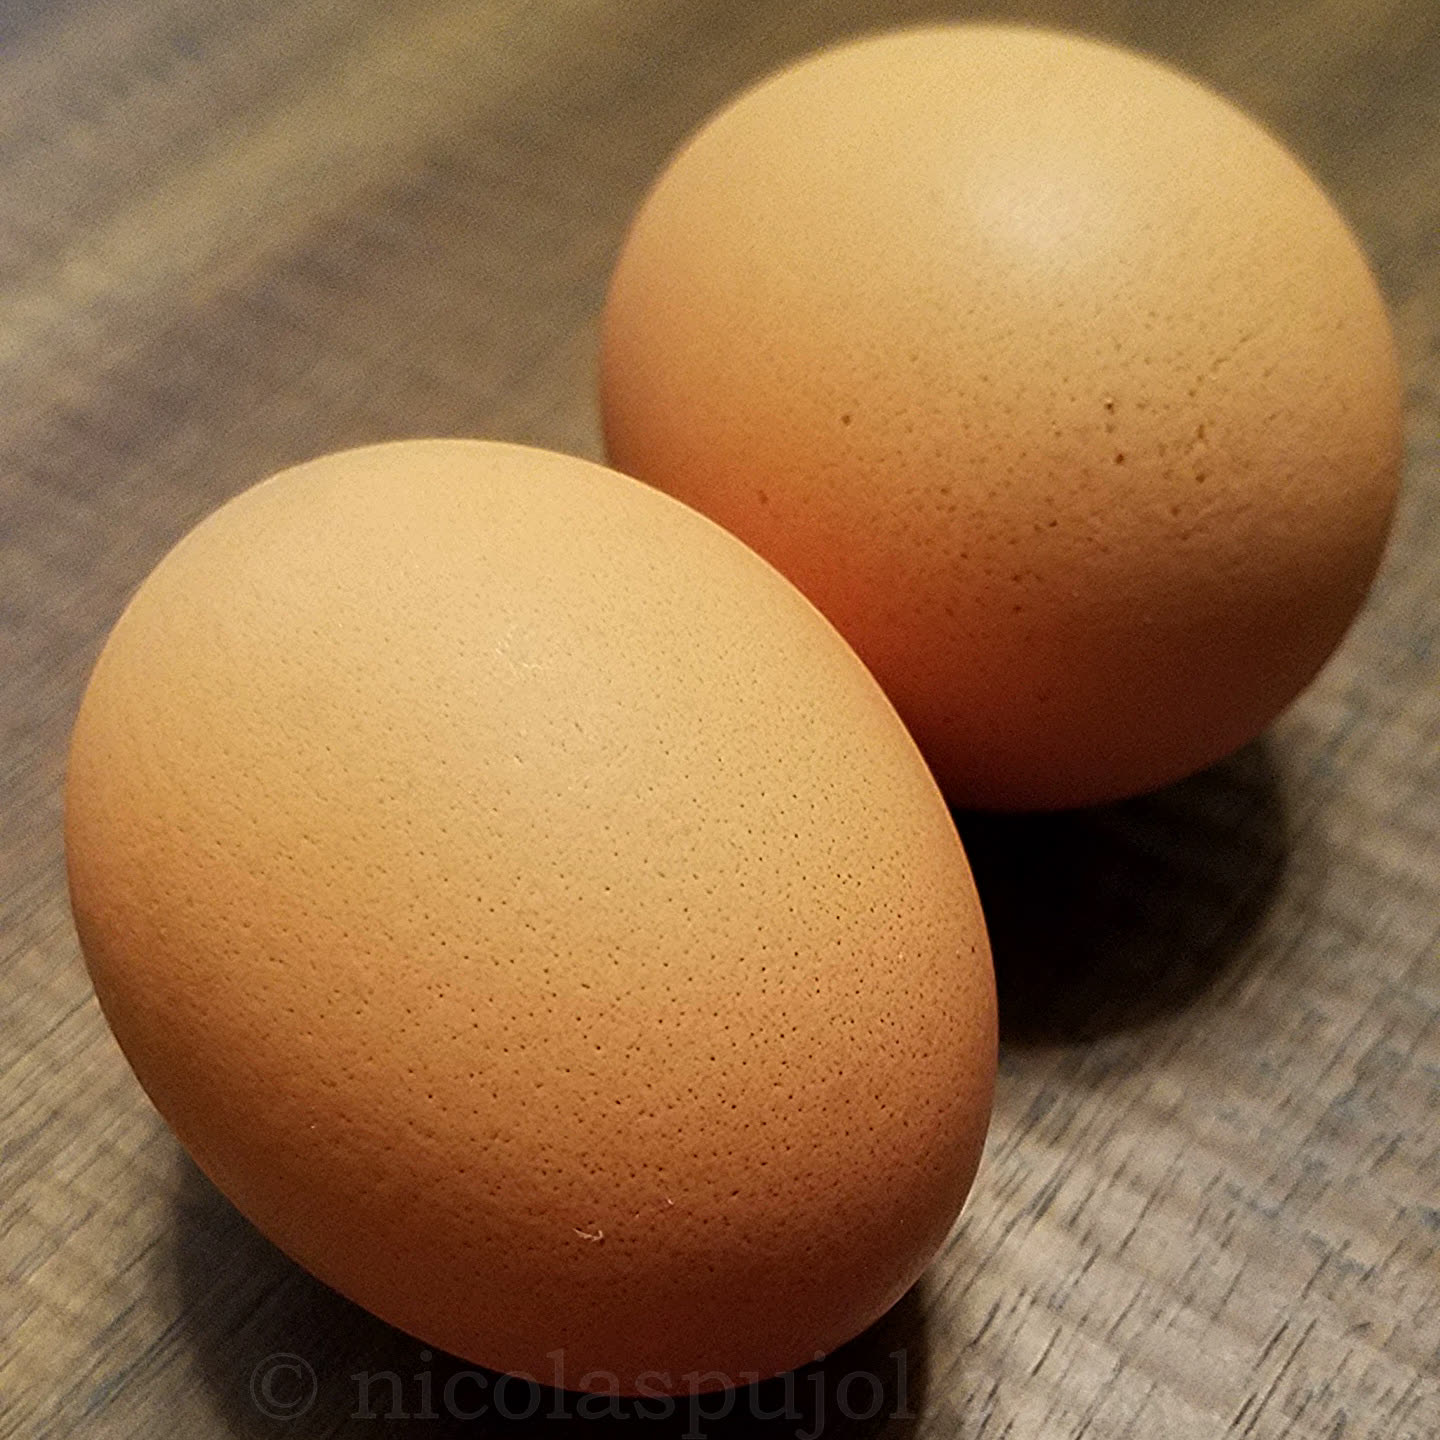 Large Eggs